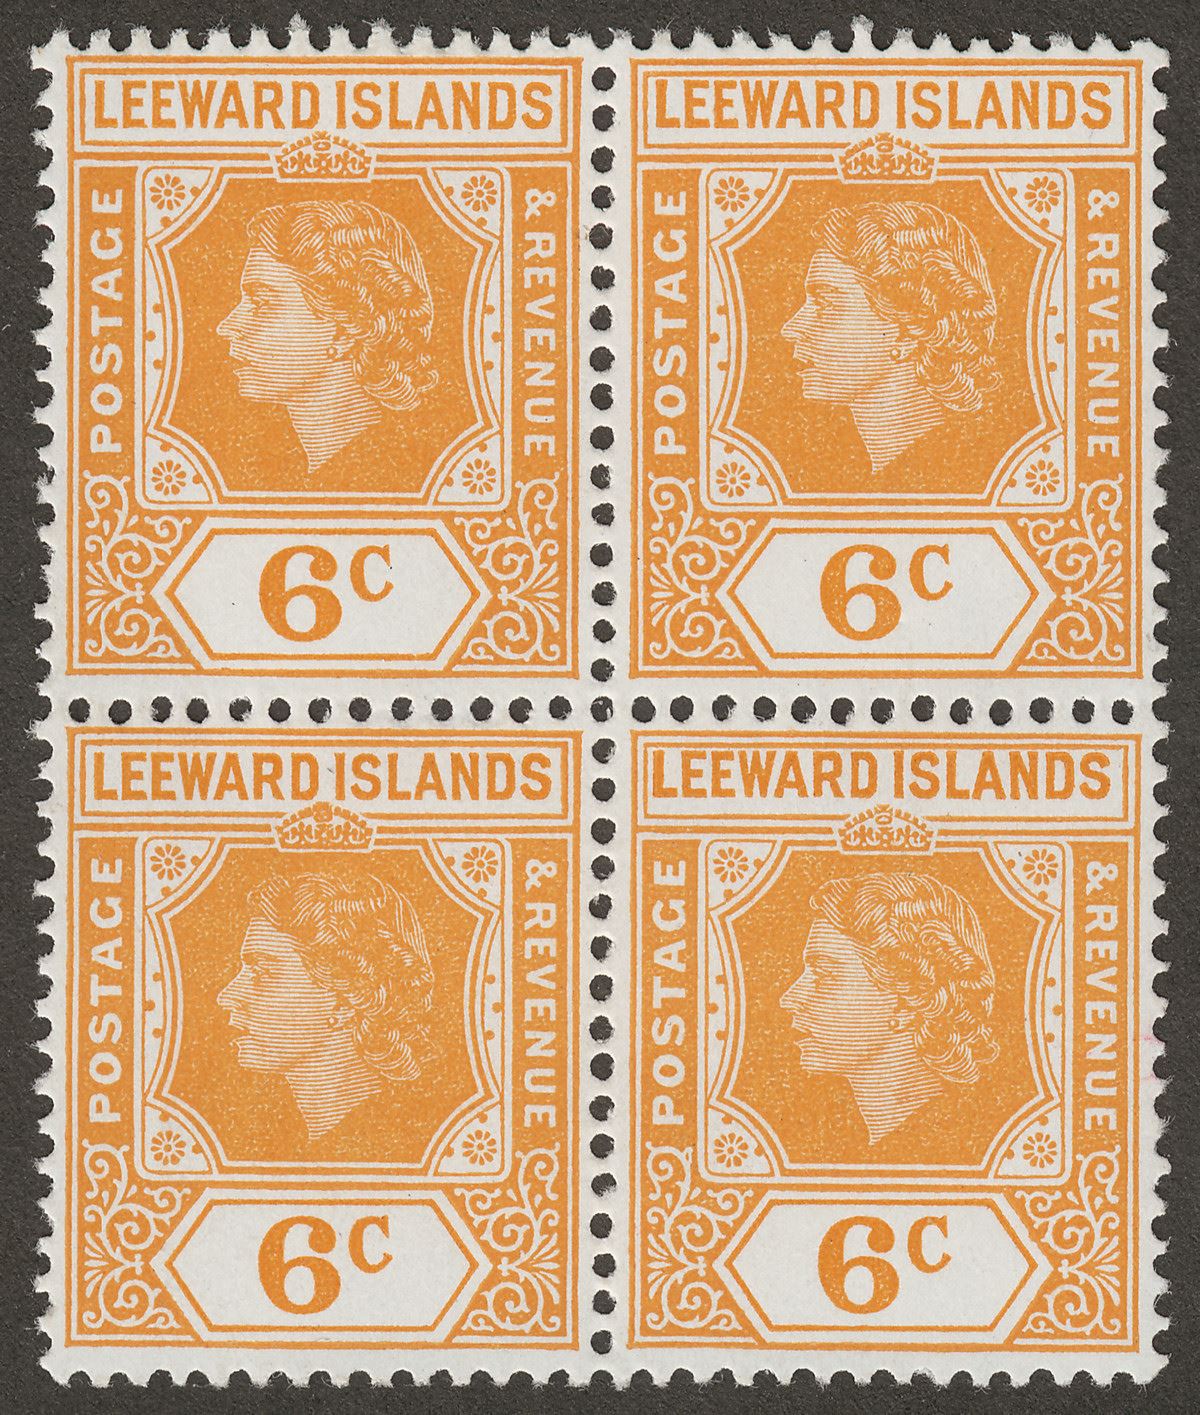 Leeward Islands 1954 QEII 6c Yellow-Orange Block with Loop Flaw Mint SG132a